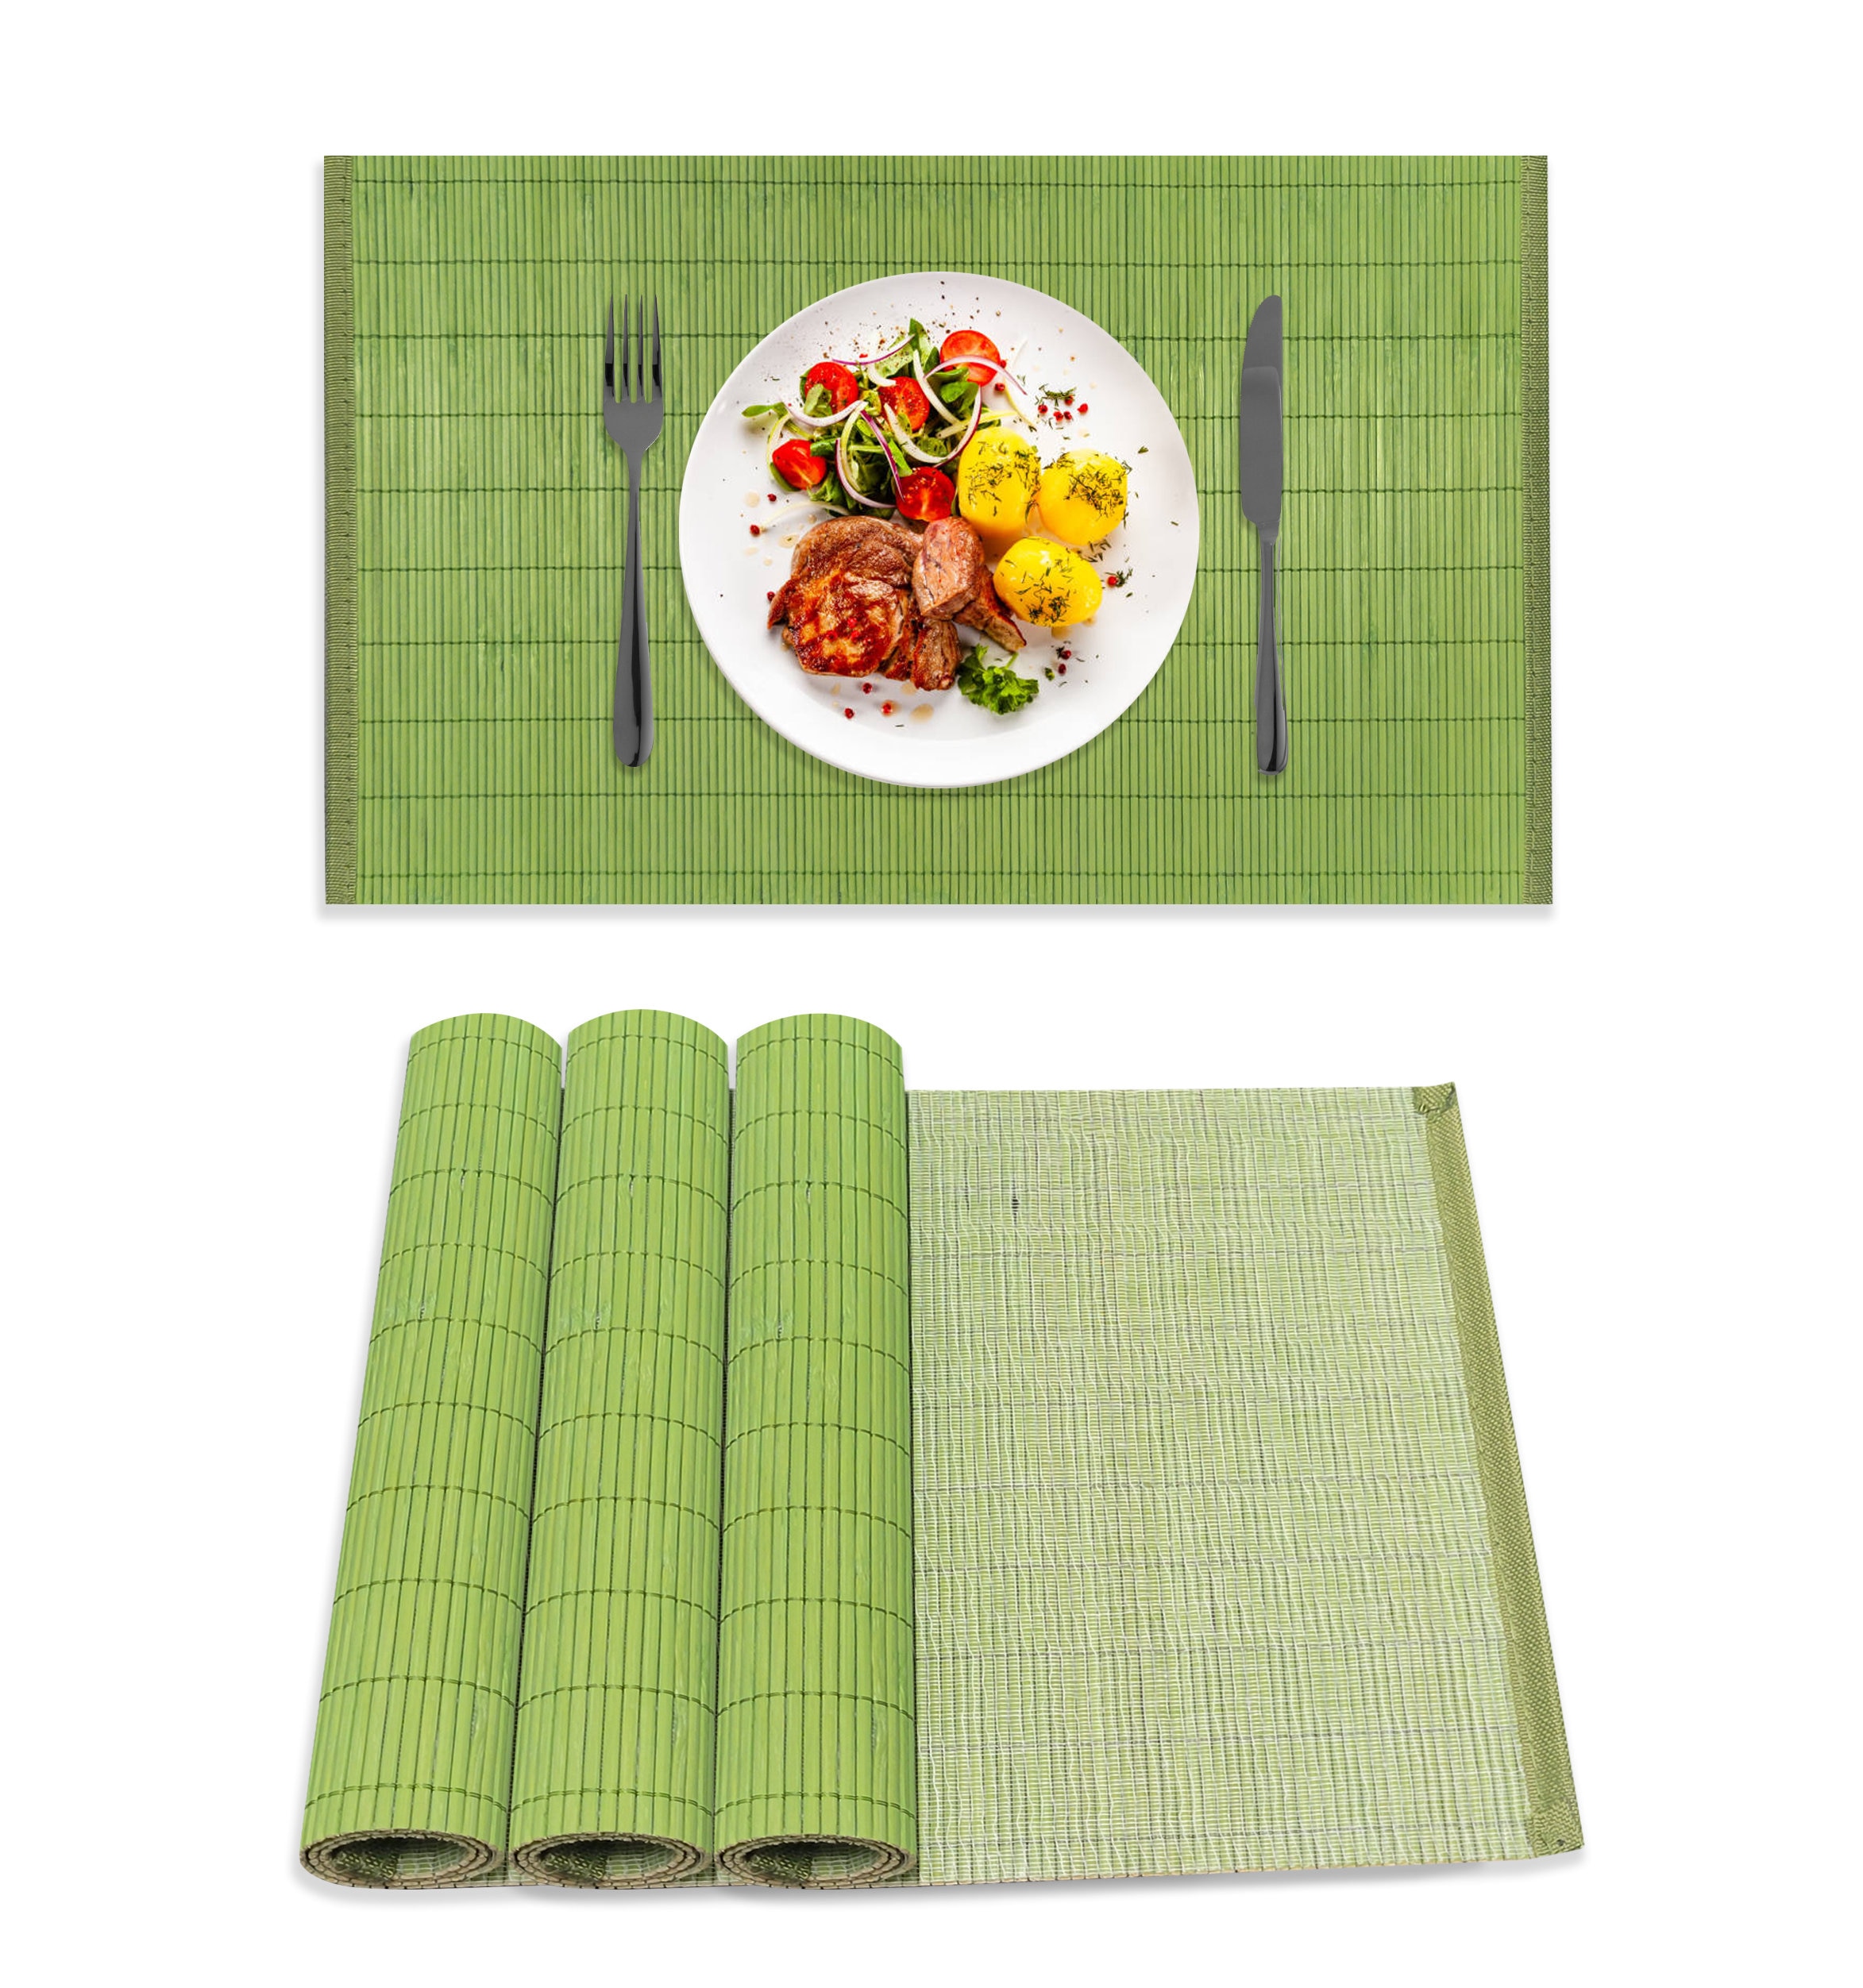 Buy DIY Bamboo Sushi Rolling Mat Set ( 2 Sets) by Onetify on Dot & Bo